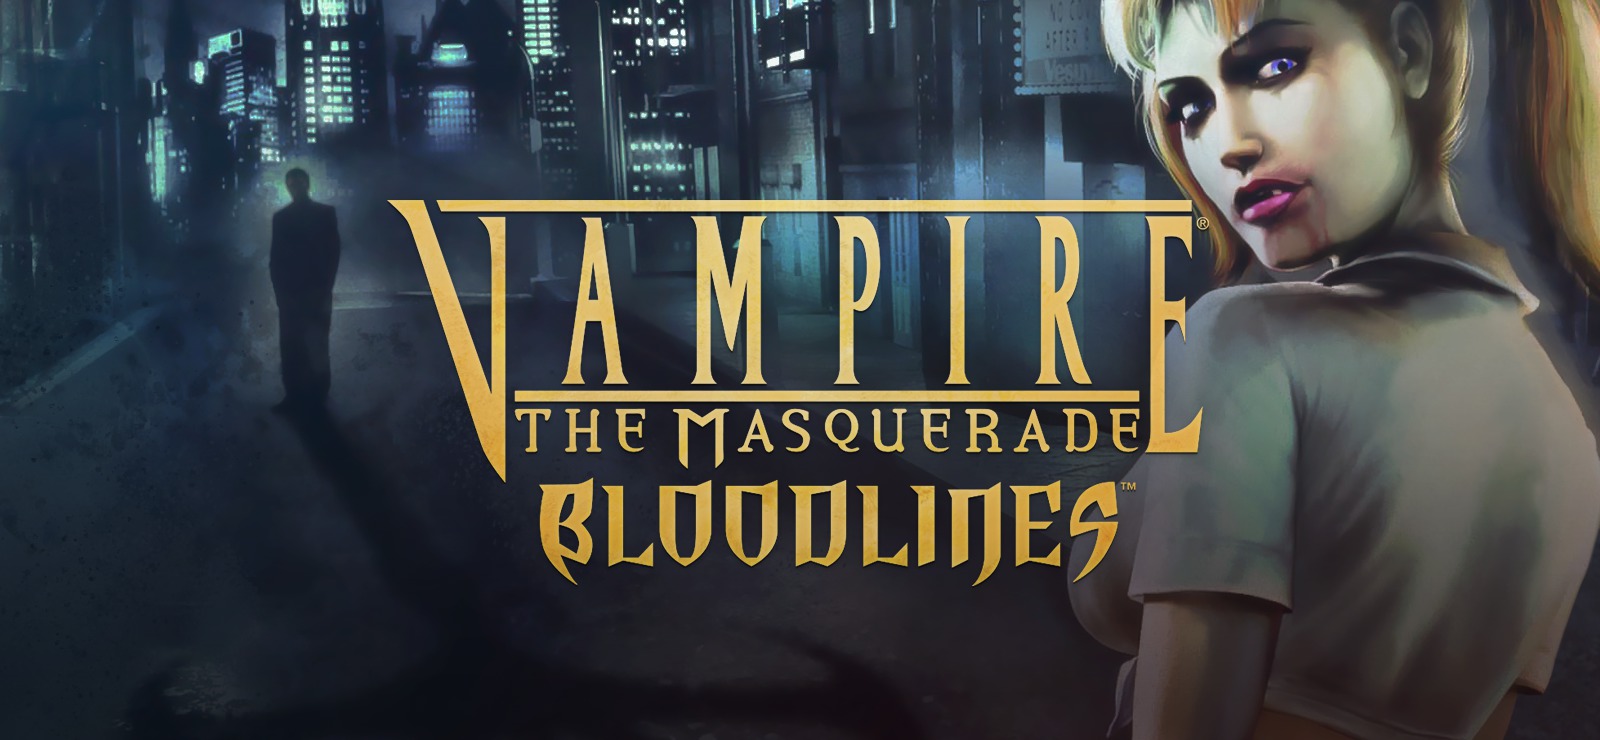 Vampire The Masquerade: Bloodlines